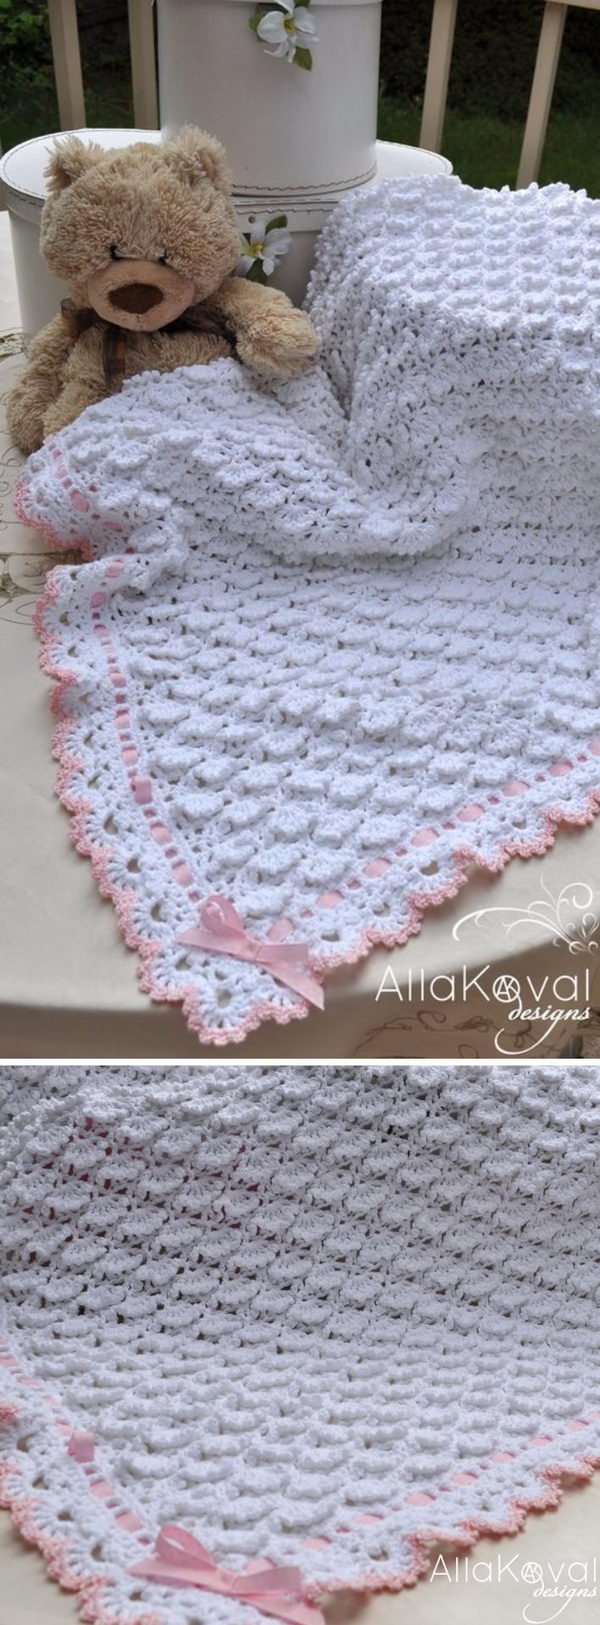 Free crochet pattern for baby blankets. 